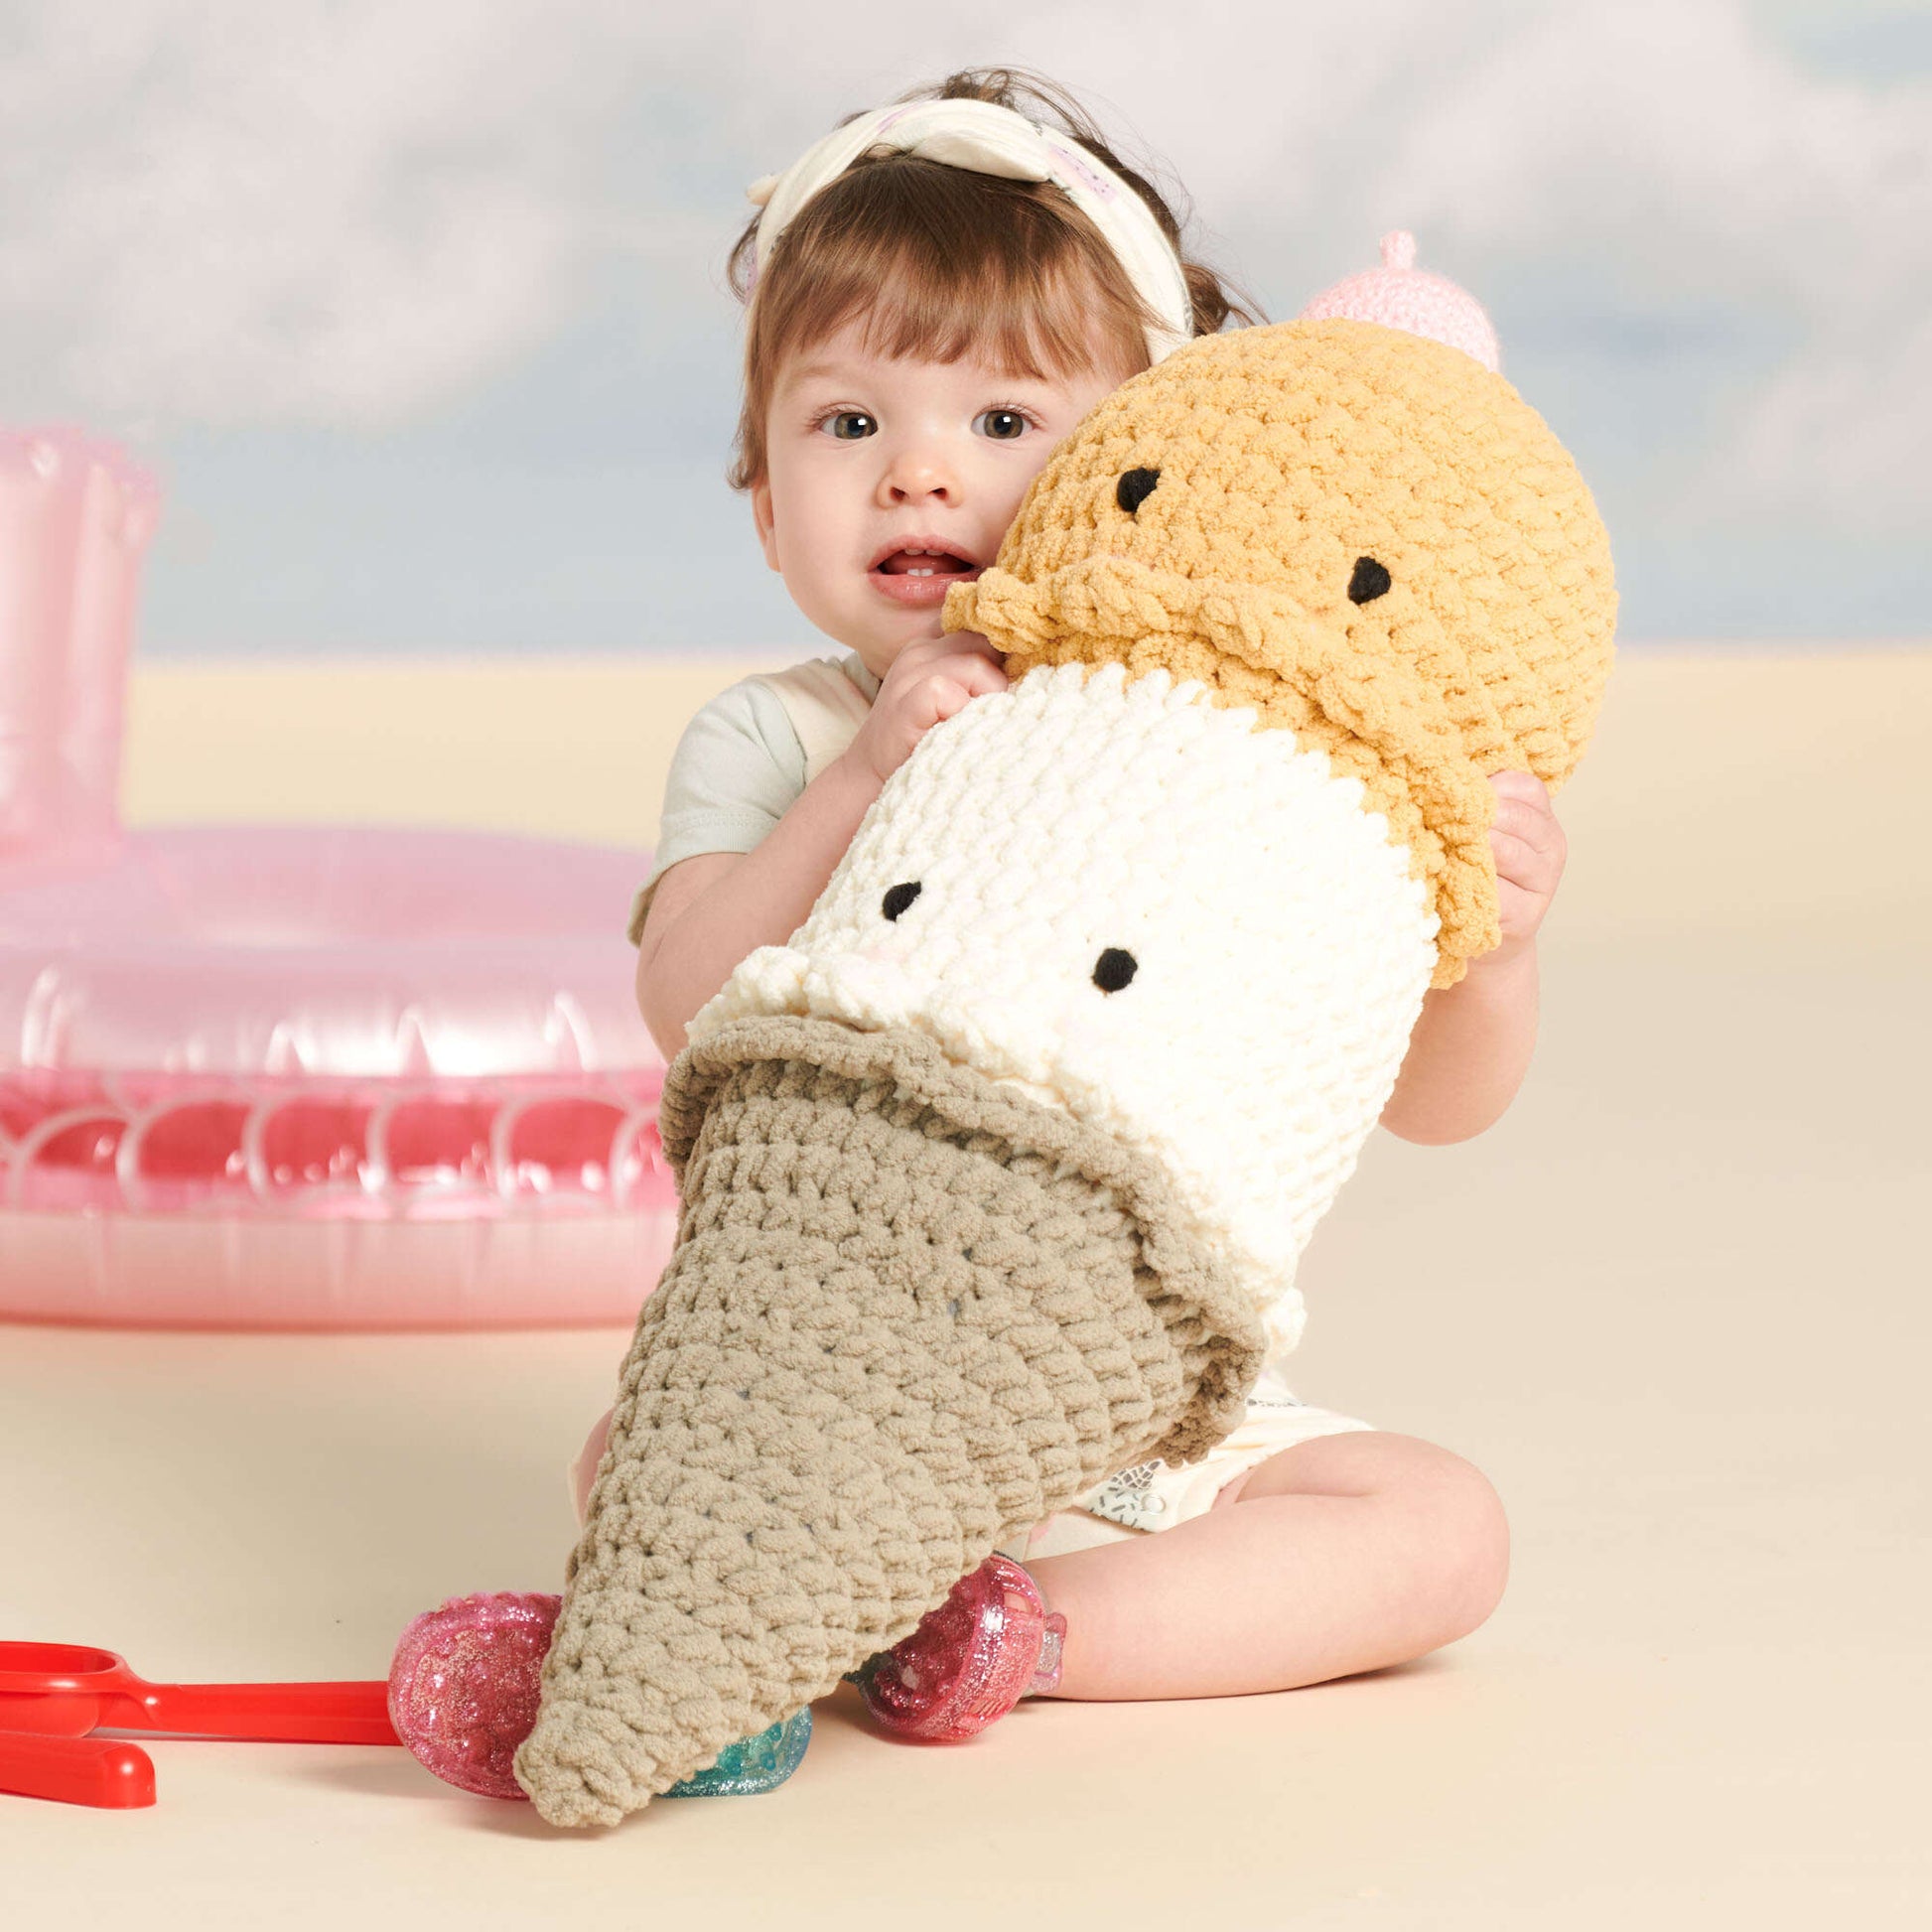 Bernat Crochet Ice Cream Cone Toy Crochet Toy made in Bernat Blanket O'Go yarn